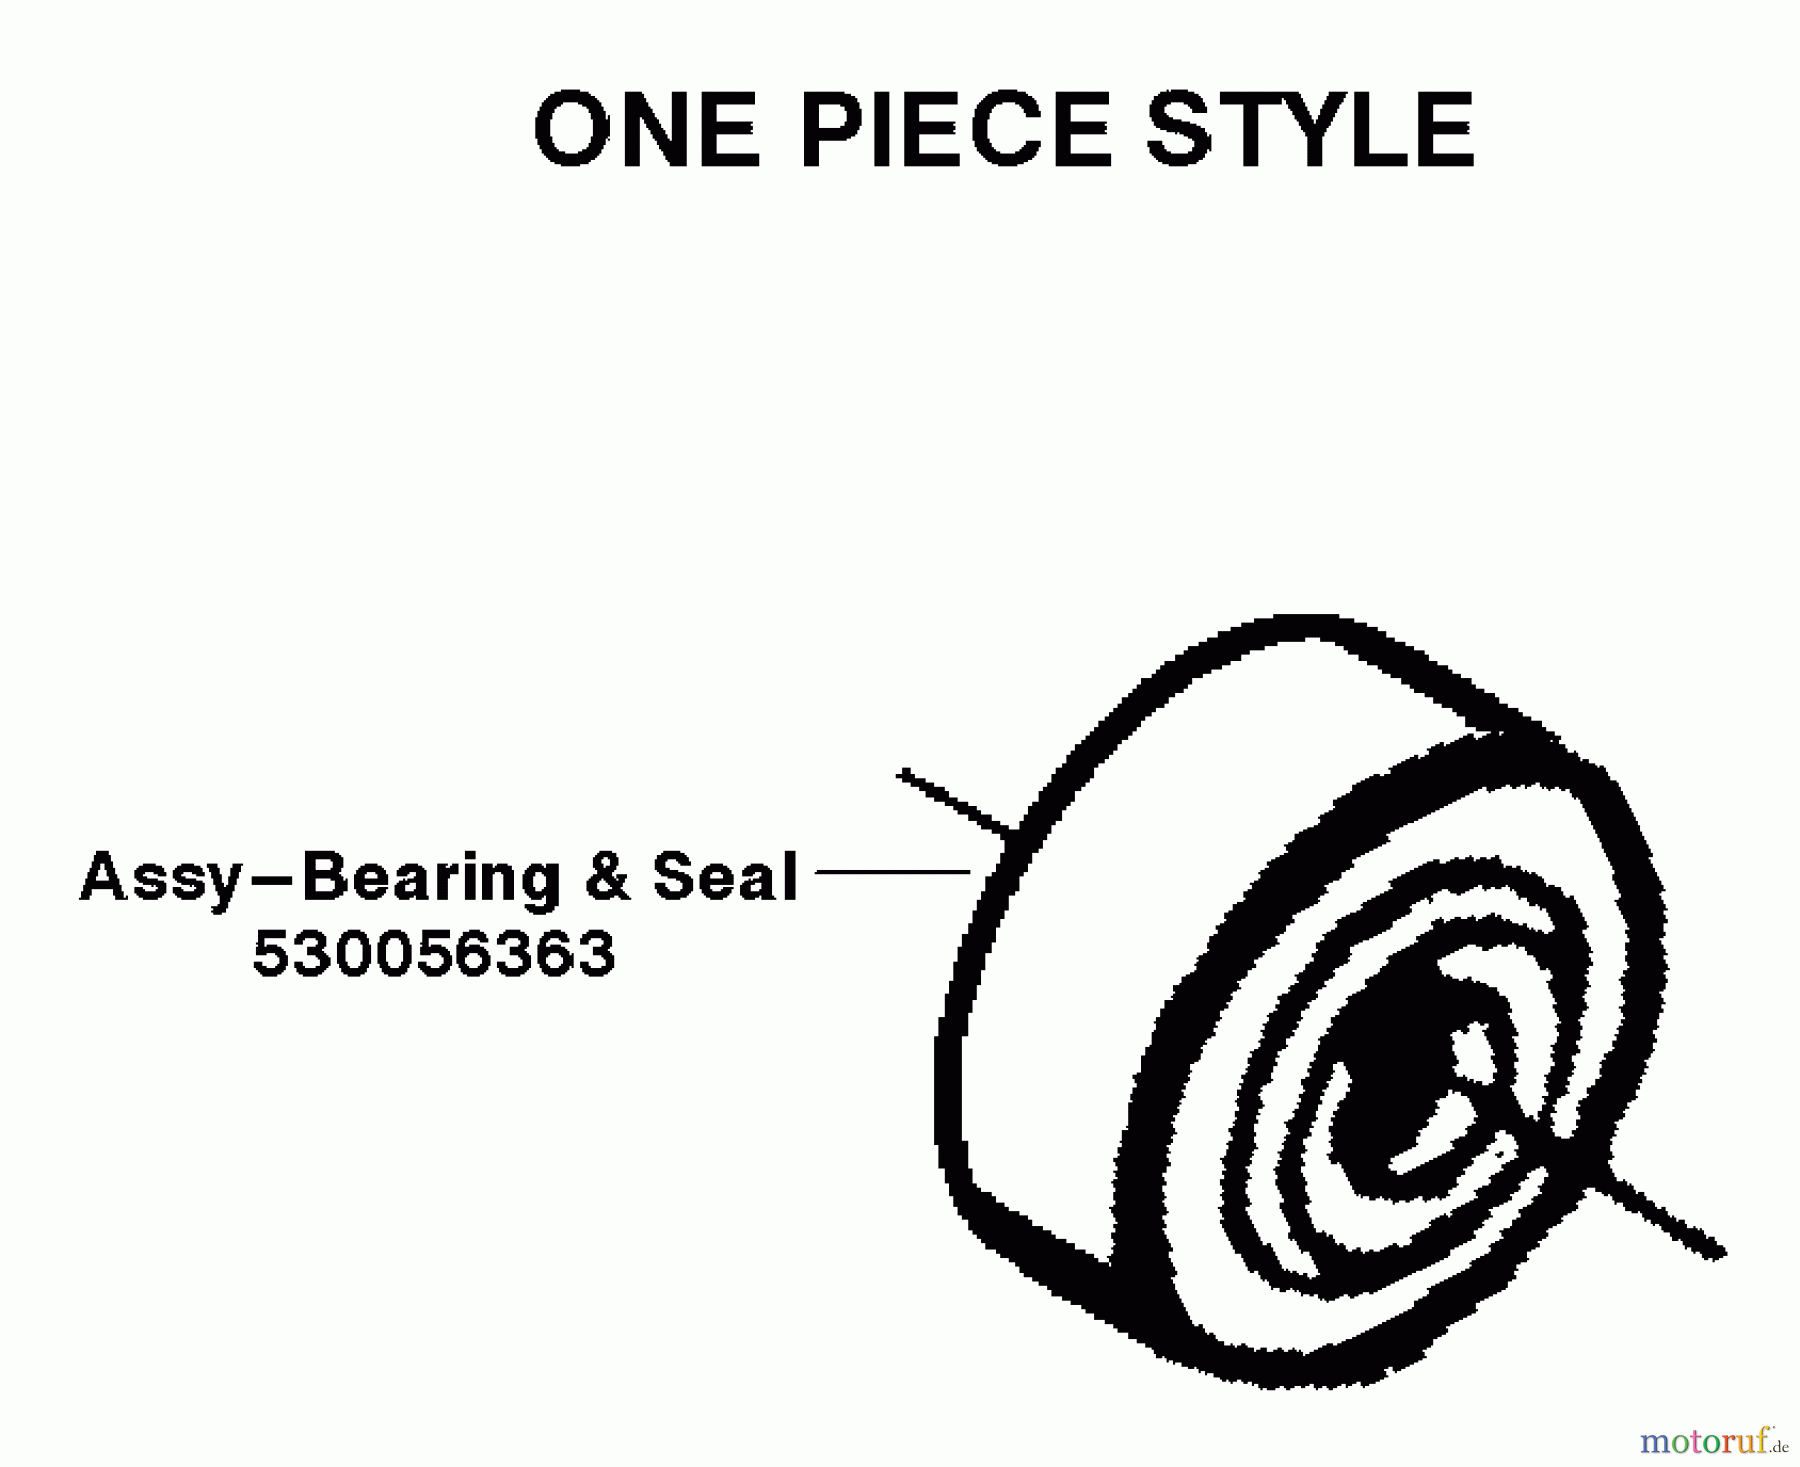  Poulan / Weed Eater Motorsägen 2900 (Type 4) - Poulan Chainsaw Bearing & Seal - One Piece Style